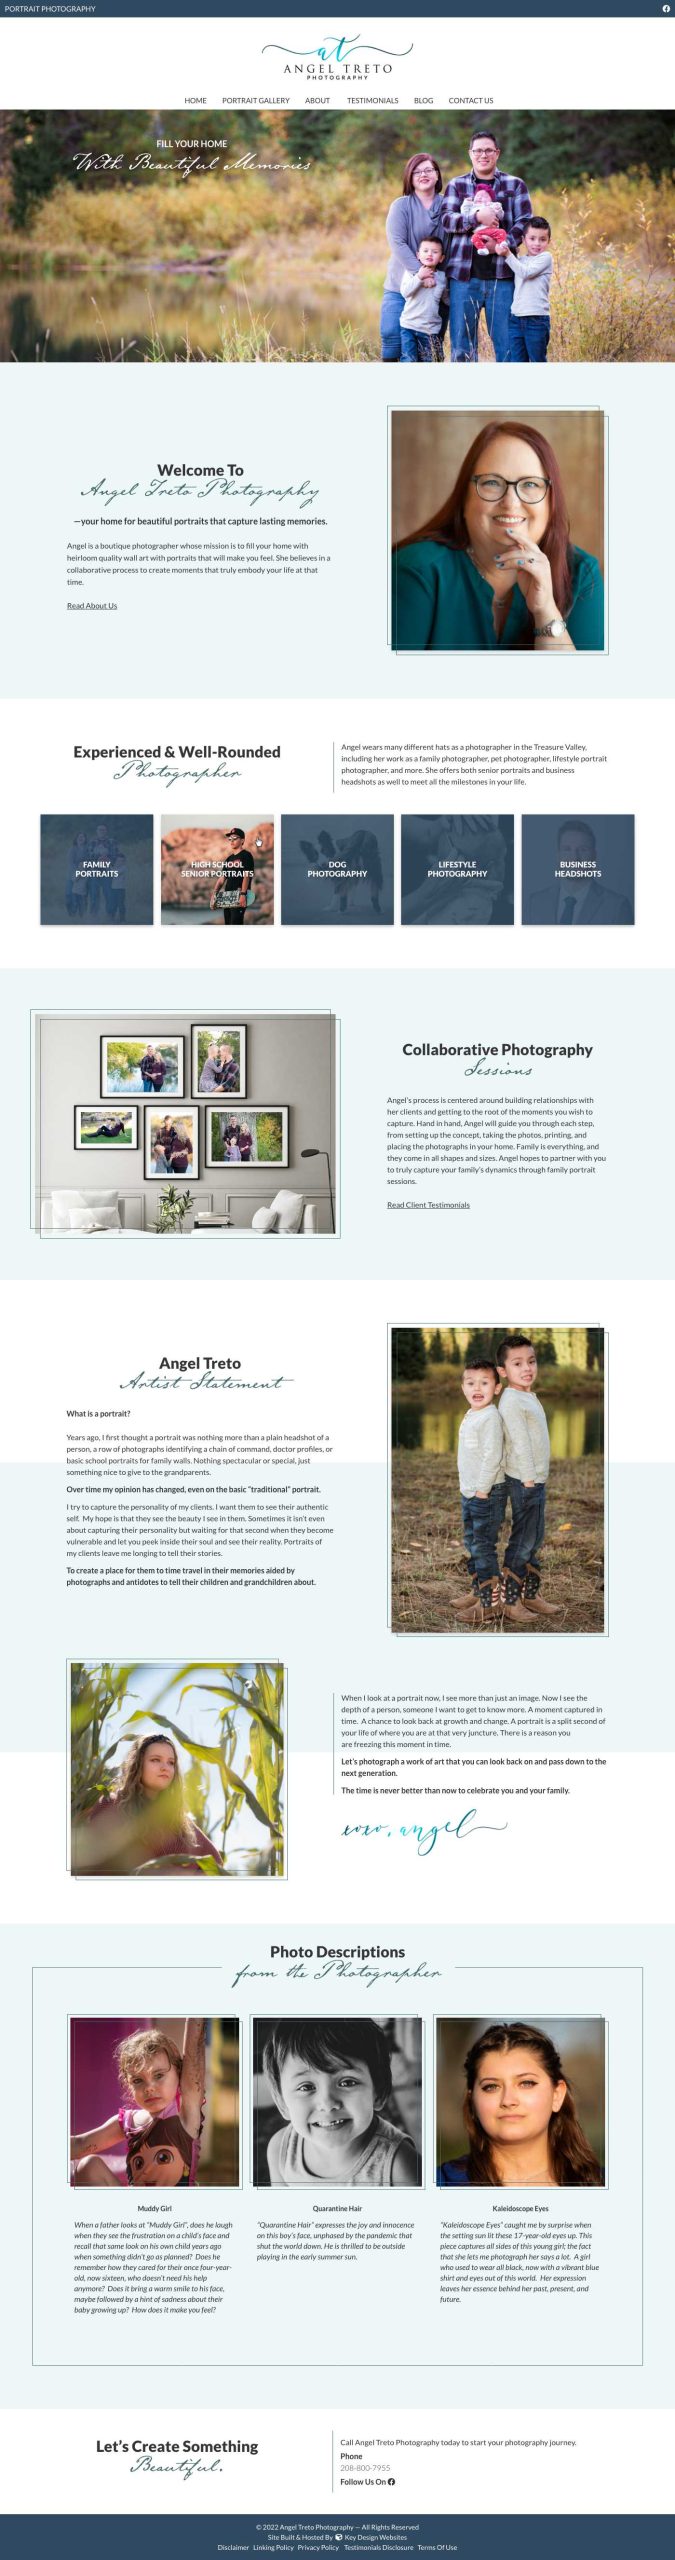 Screenshot of the Angel Treto Photography website homepage.